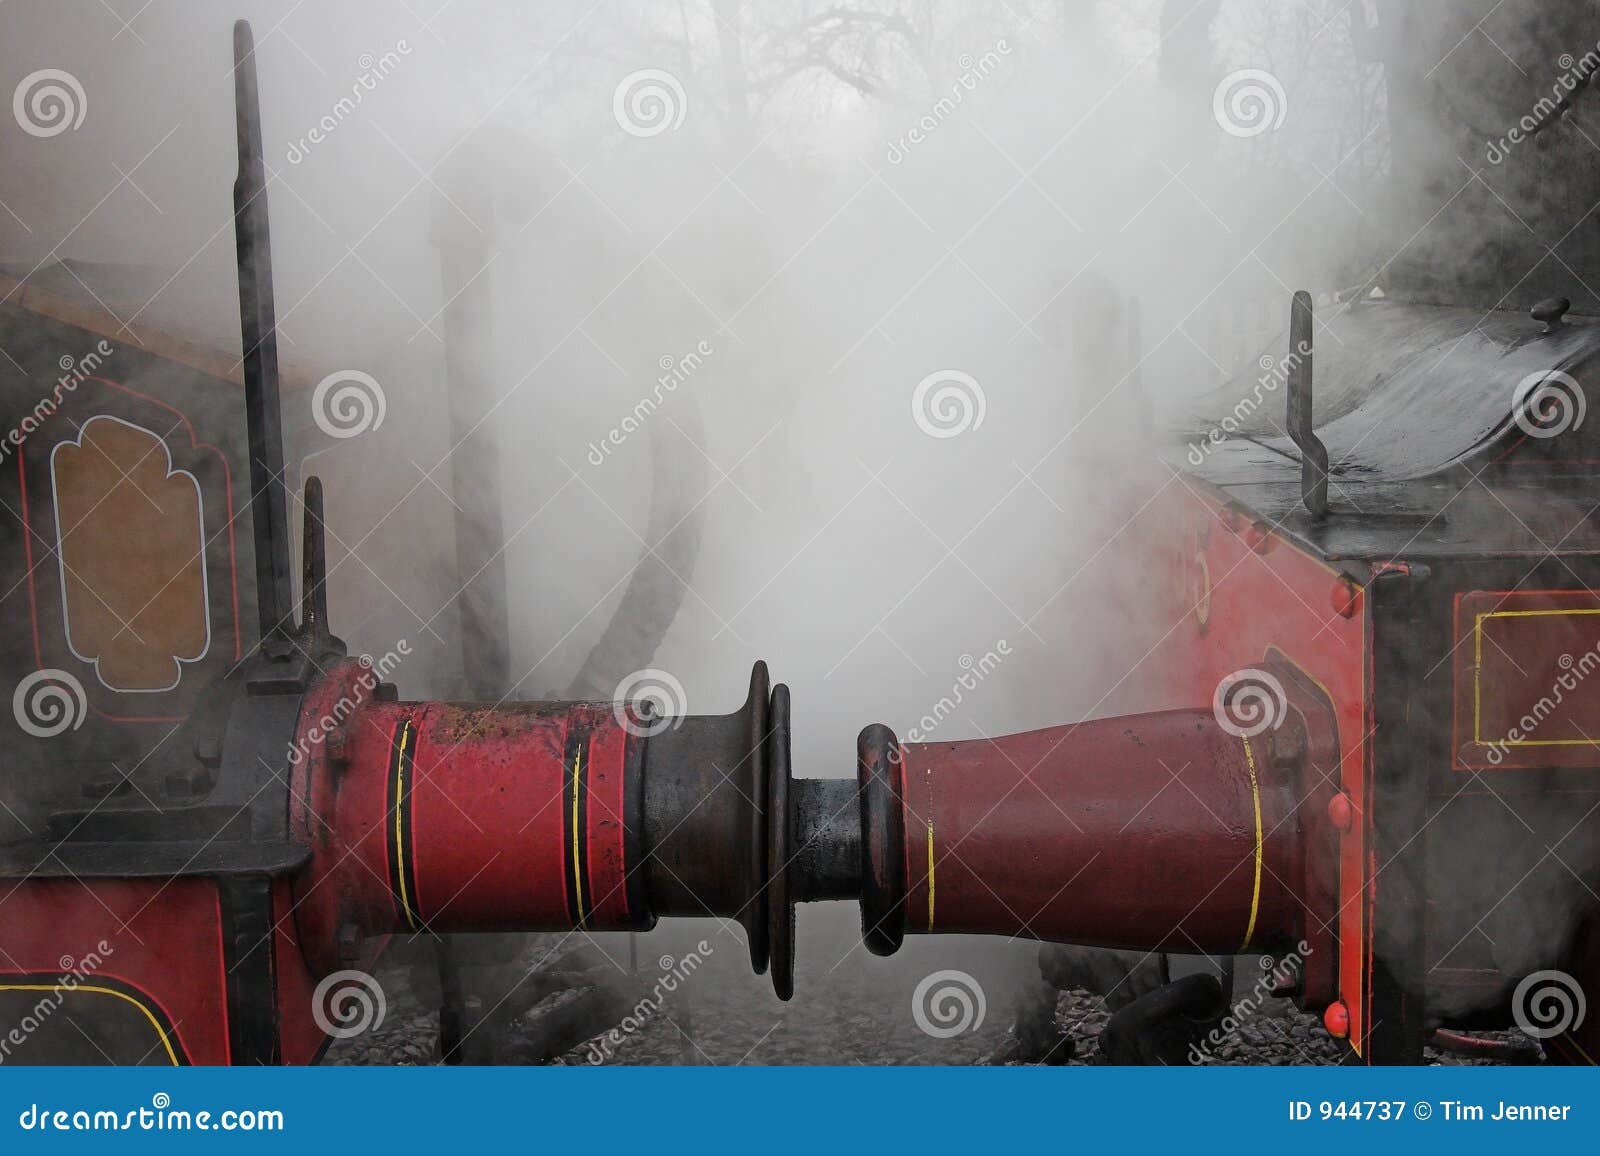 steam-engine-buffers-944737.jpg